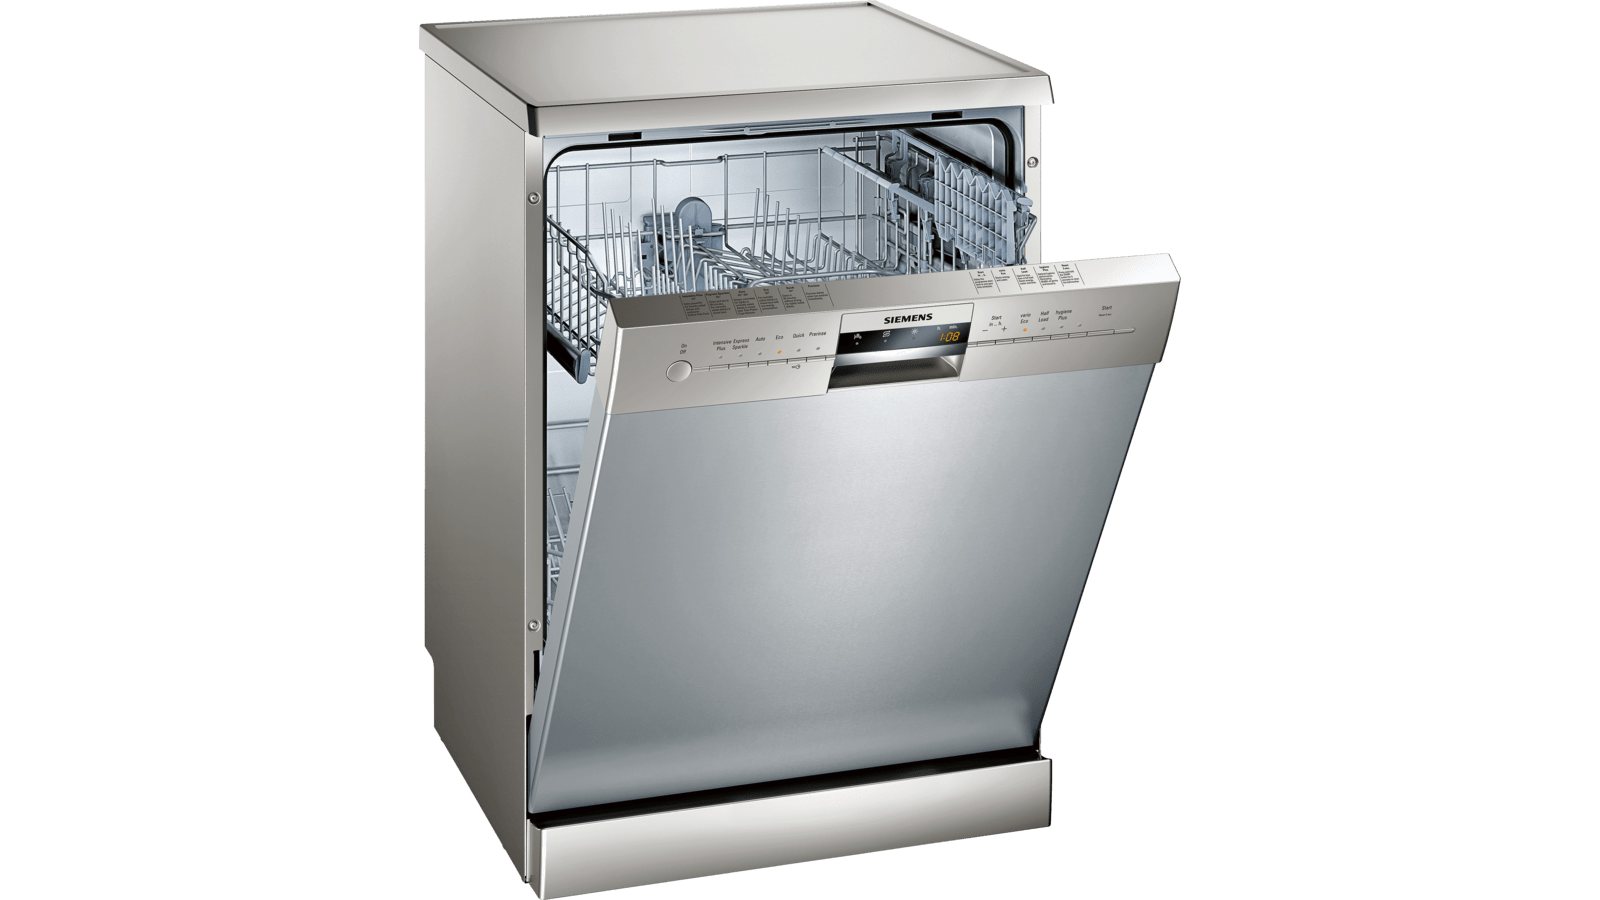 siemens dishwasher sn26l801in reviews